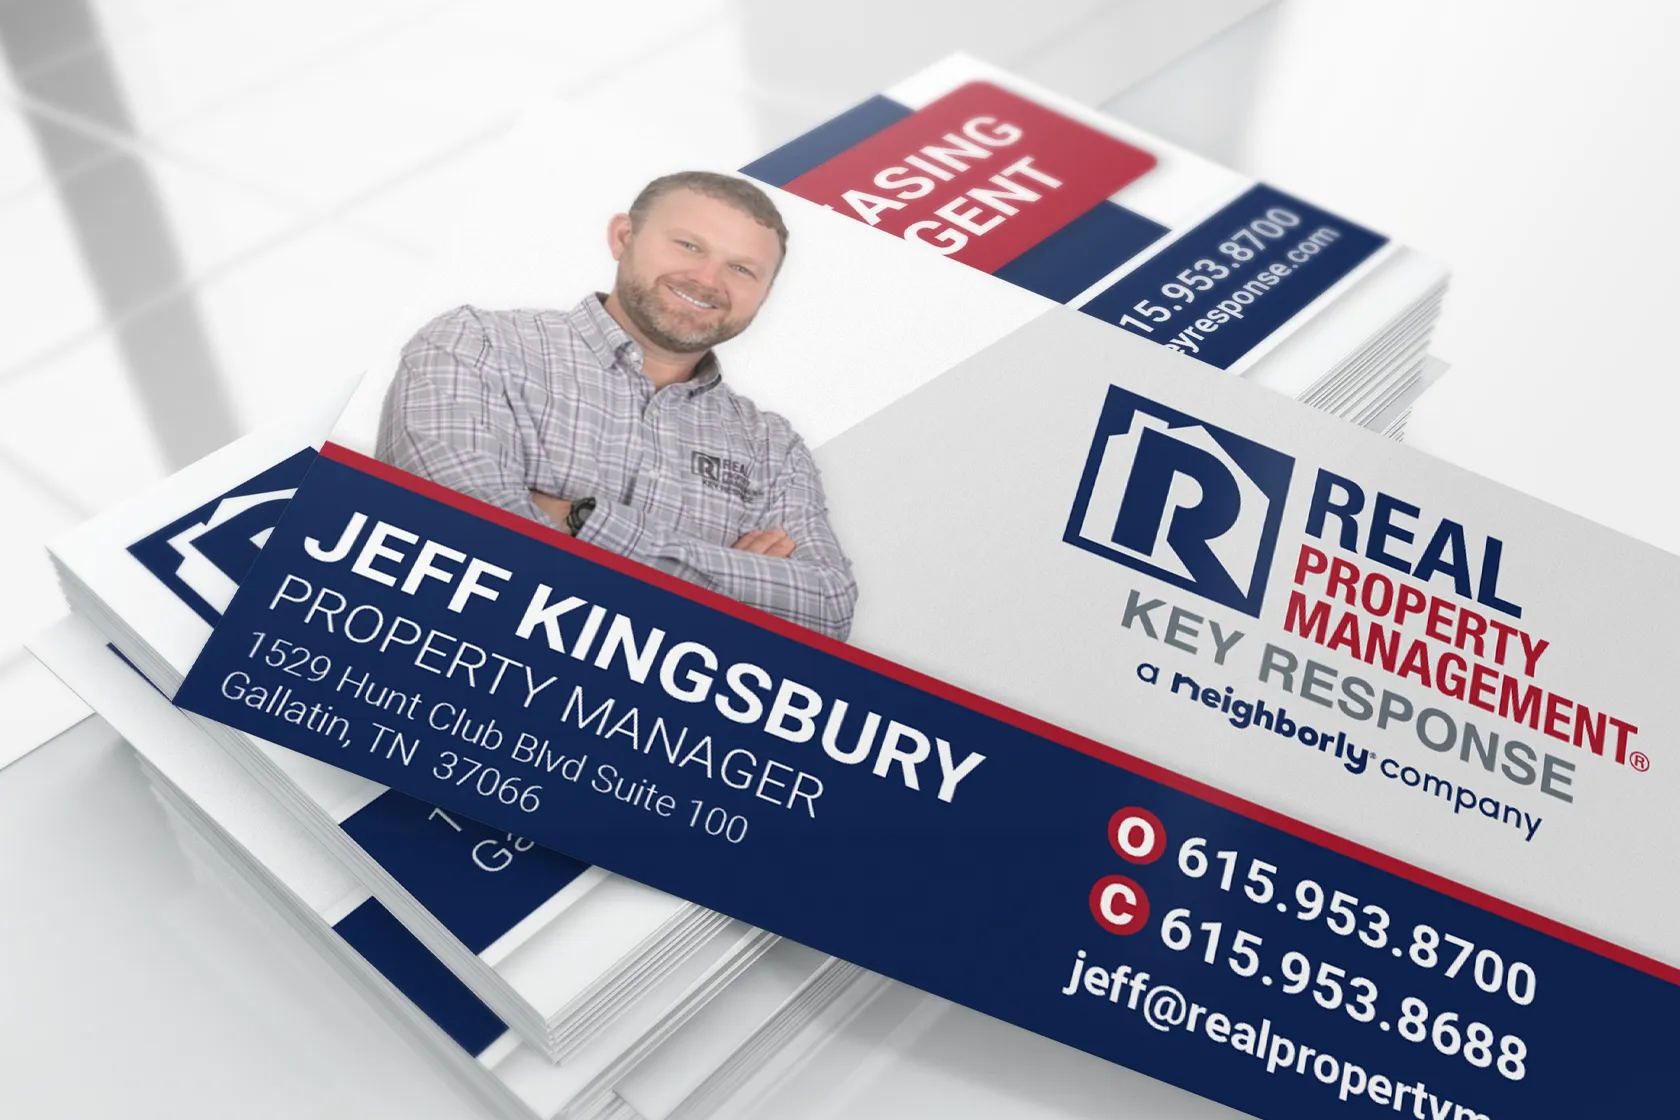 Jeff Kingsbury Real Property Management Key Response Business Cards